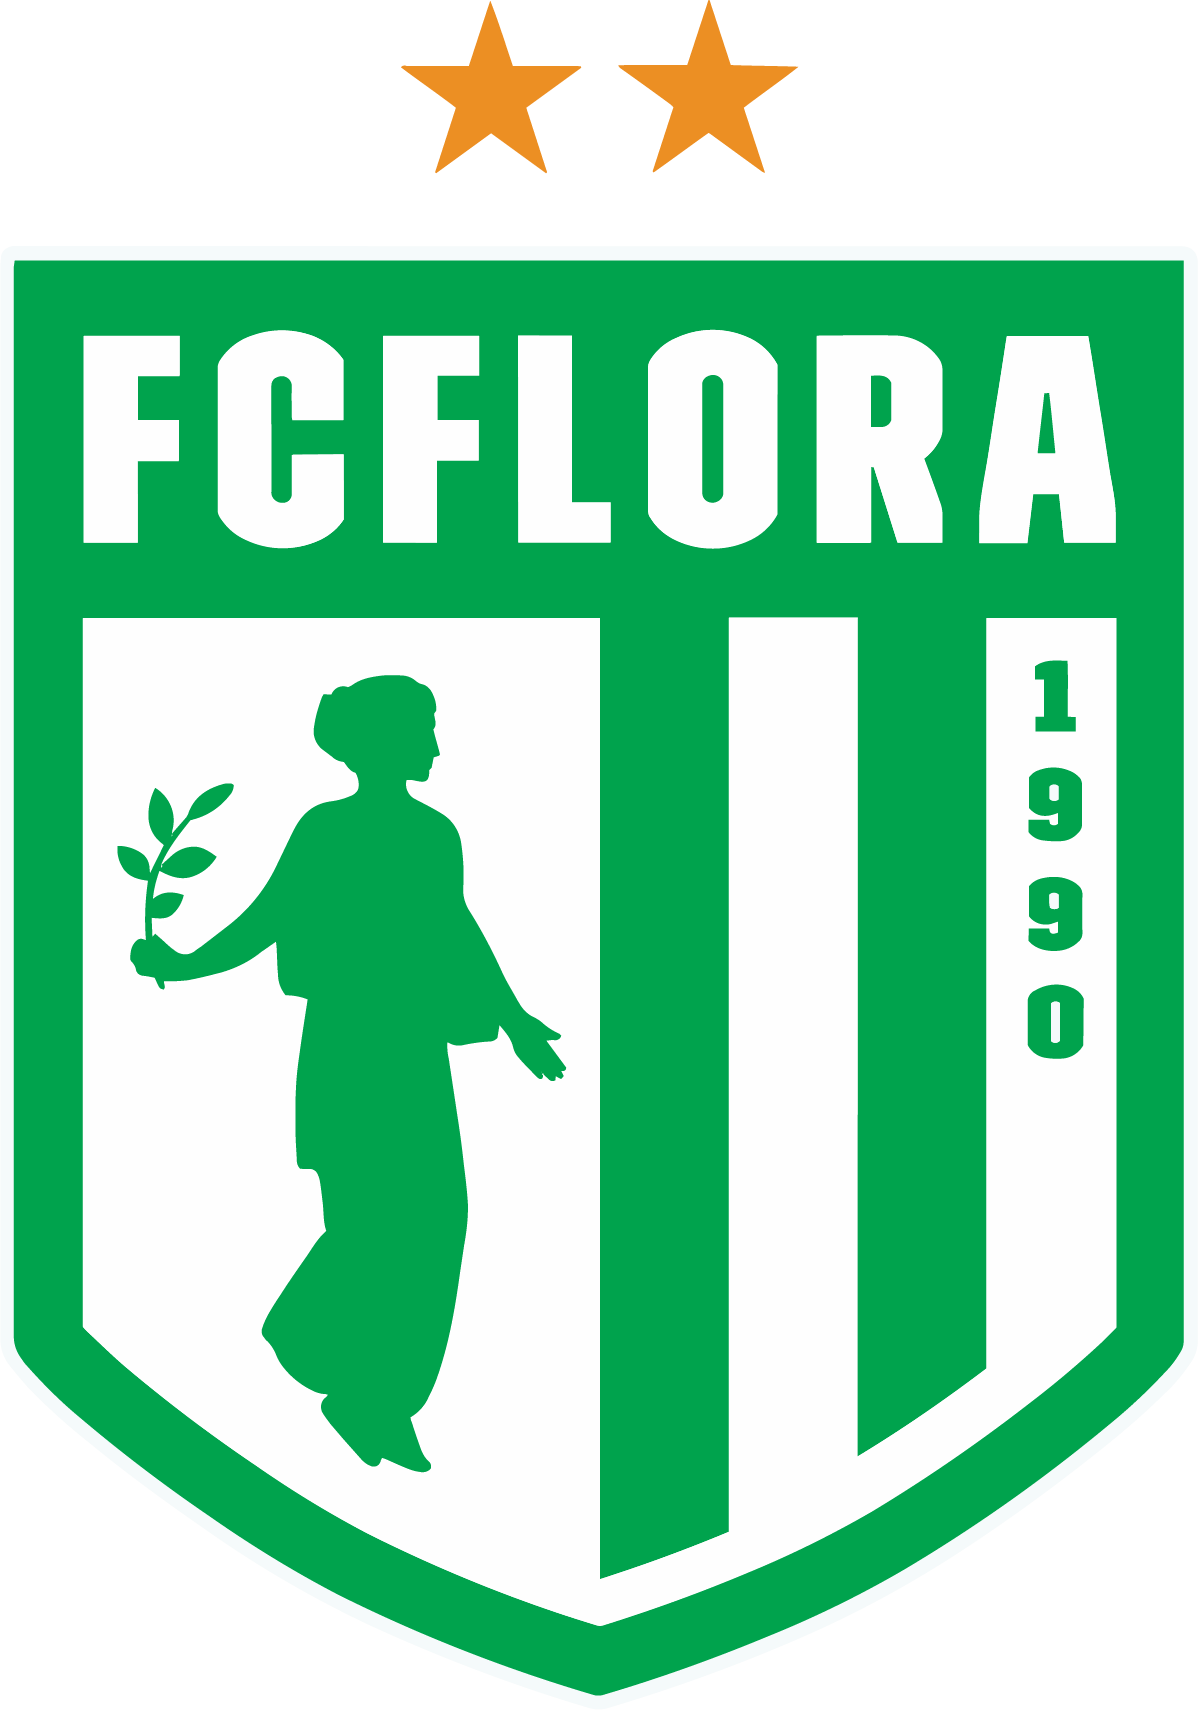 FC FLORA CMYK 91 0 100 0 VECTOR TRUKK